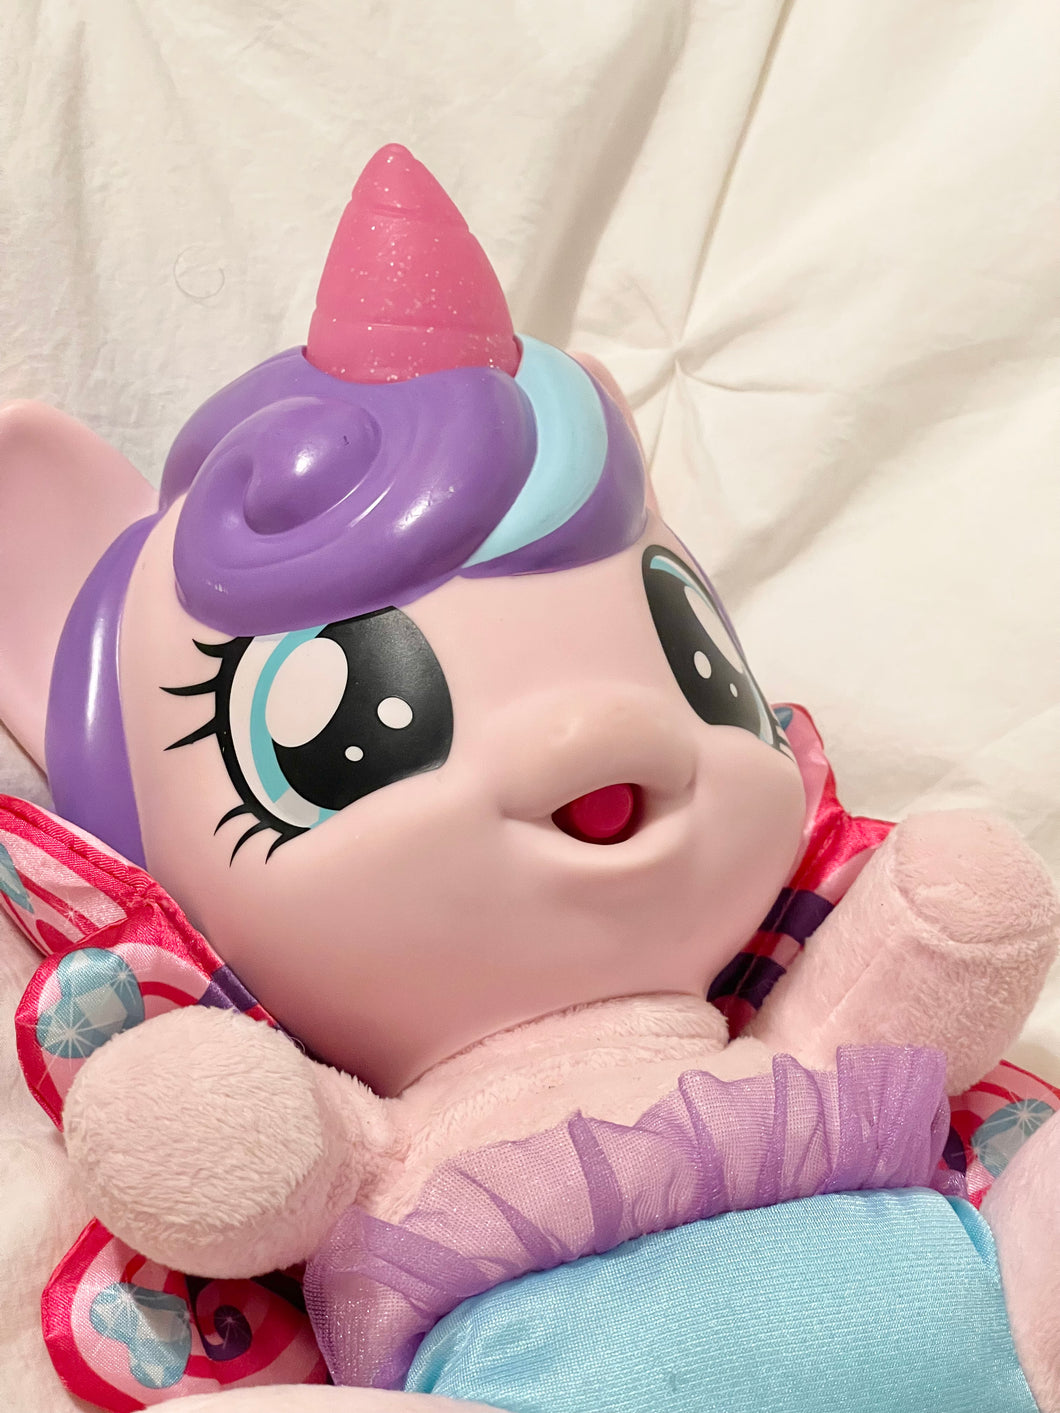 My Little Pony - Baby Flurry plush - talking!